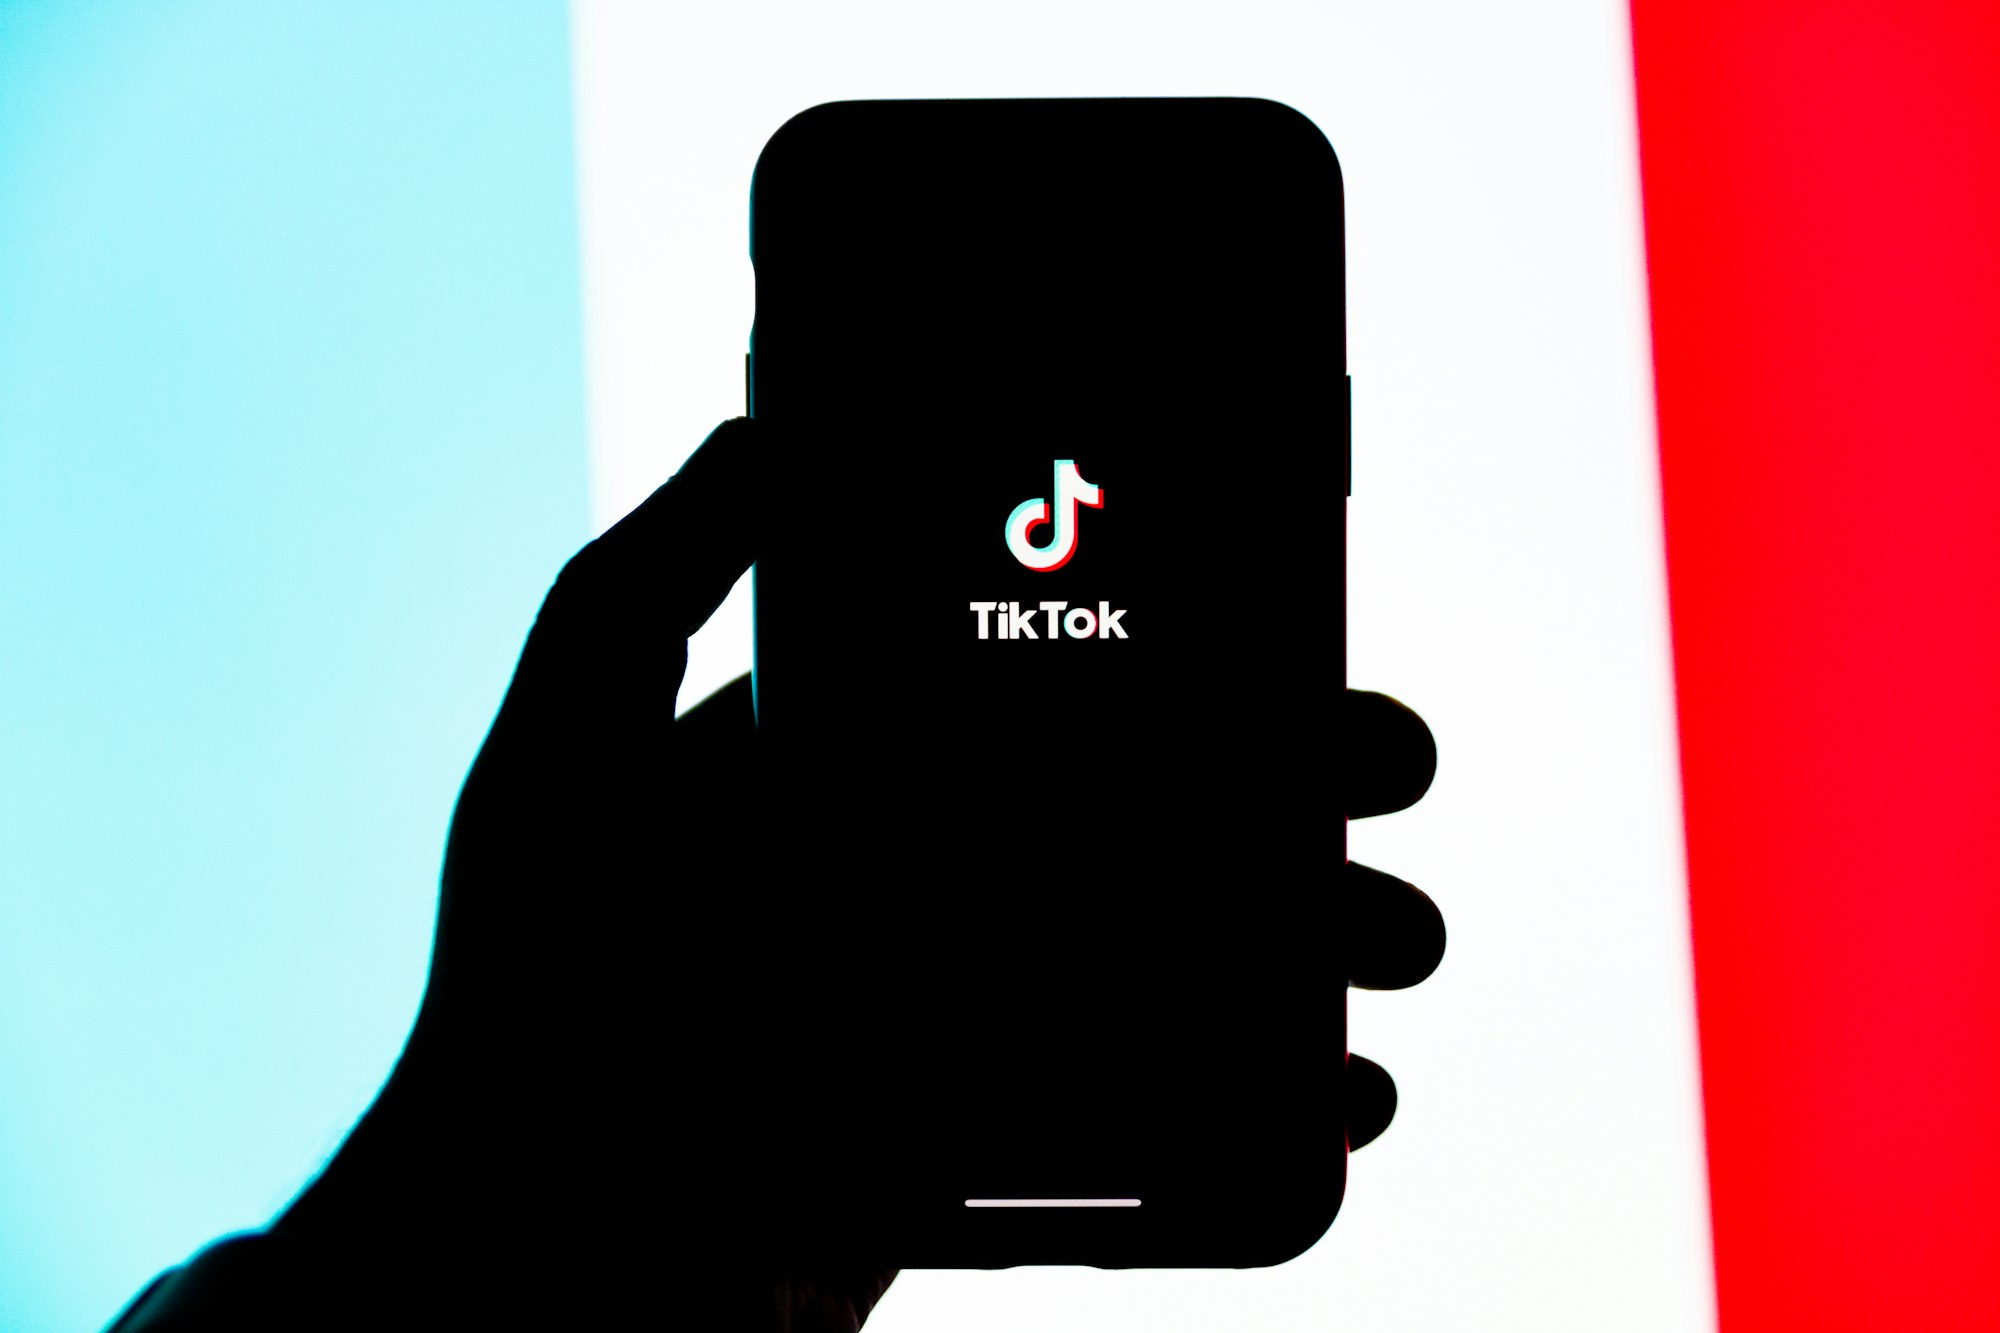 TikTok CEO testifies in U.S. Congress hearing amid a potential ban